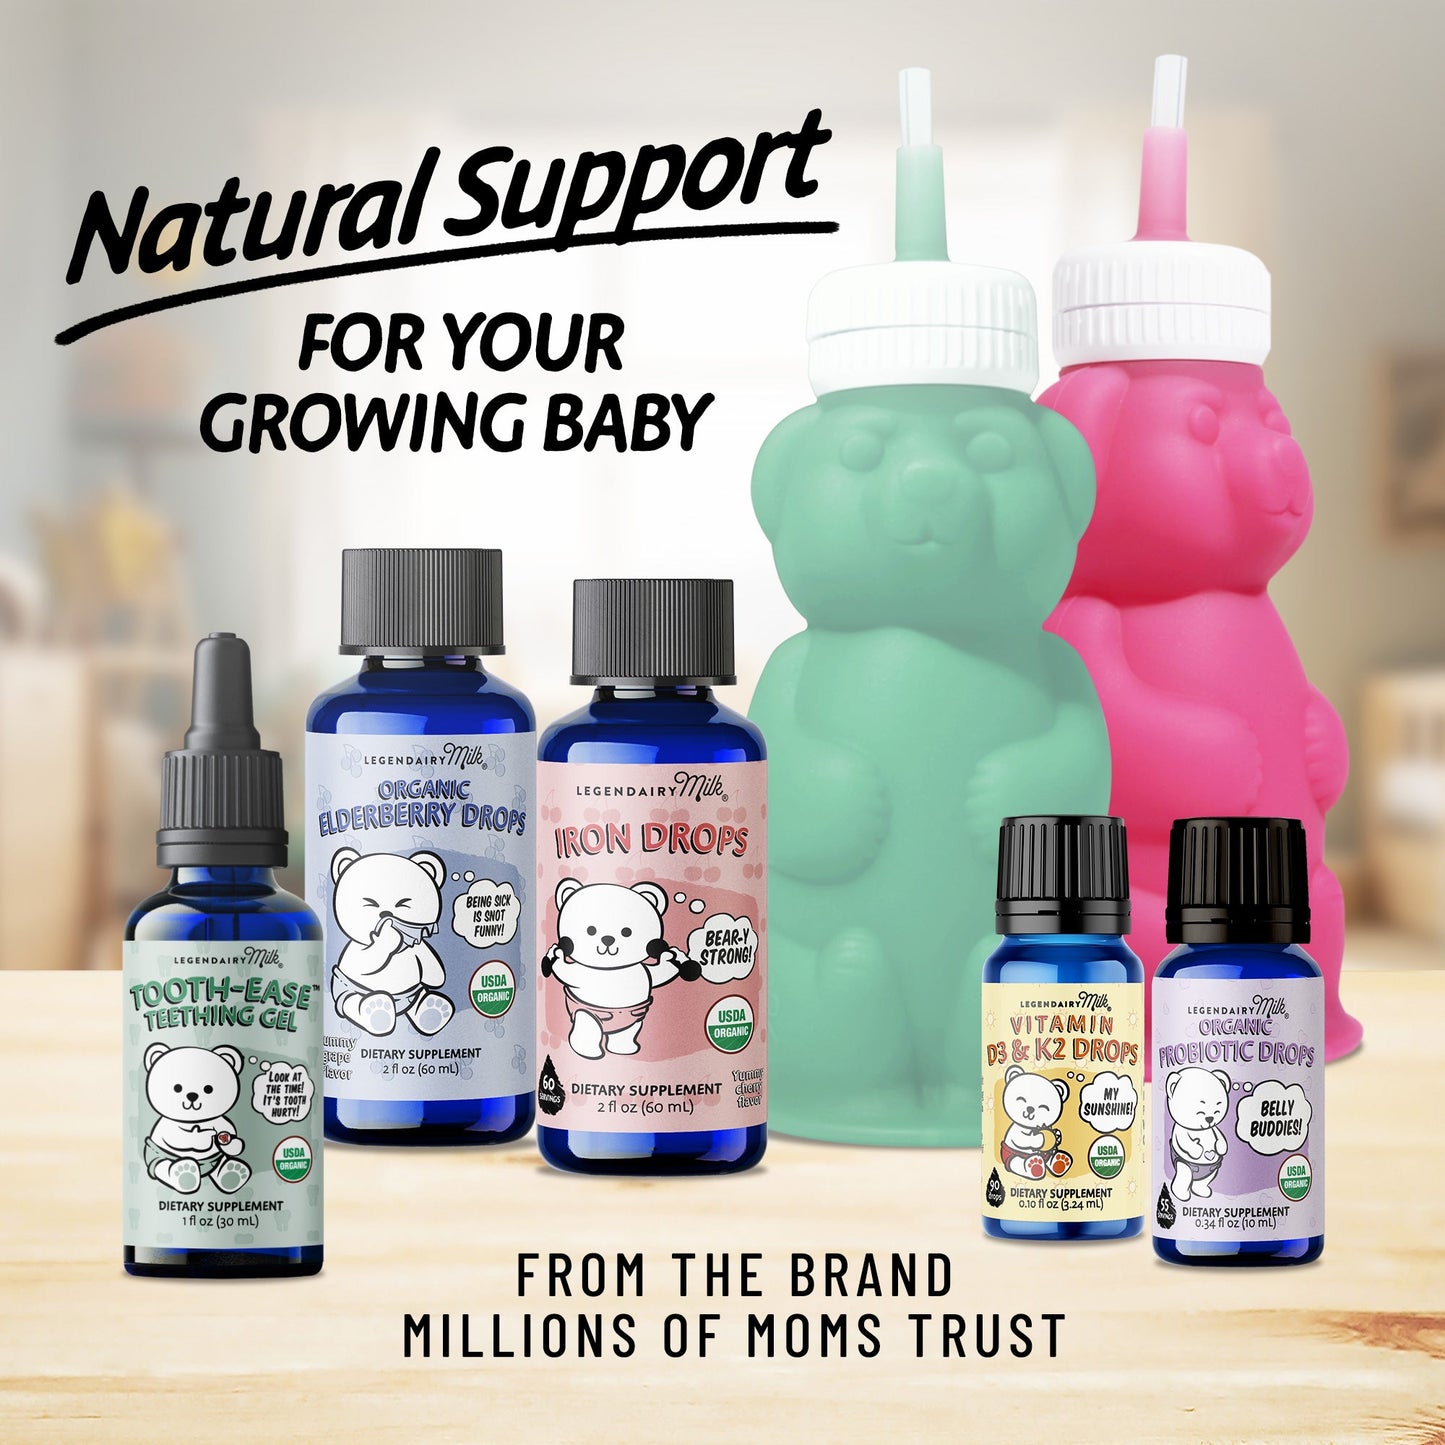 Organic Baby and Toddler Probiotic Drops - Legendairy Milk